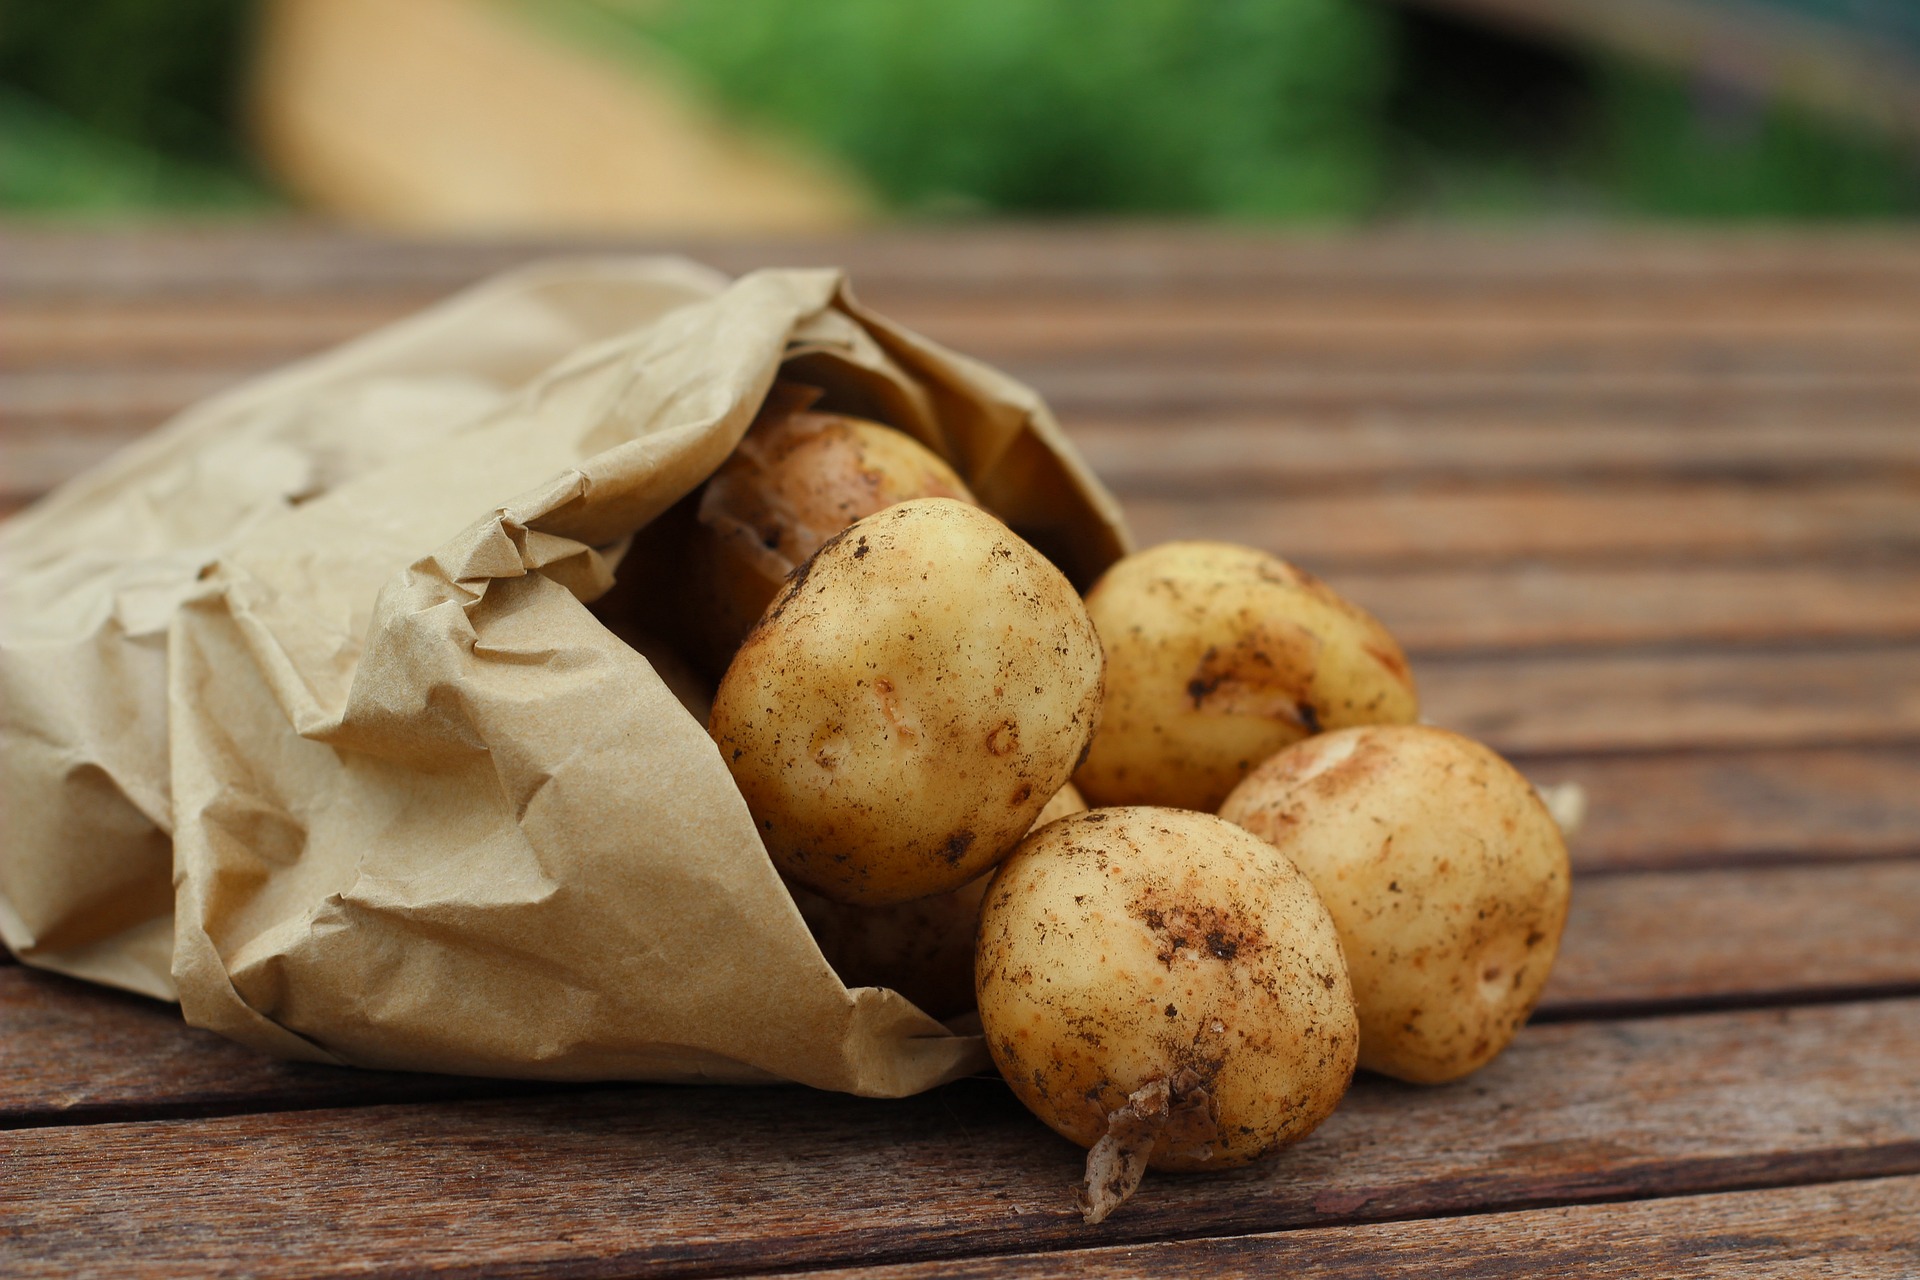 Smashed Potatoes (Quelle: Pixabay.com)